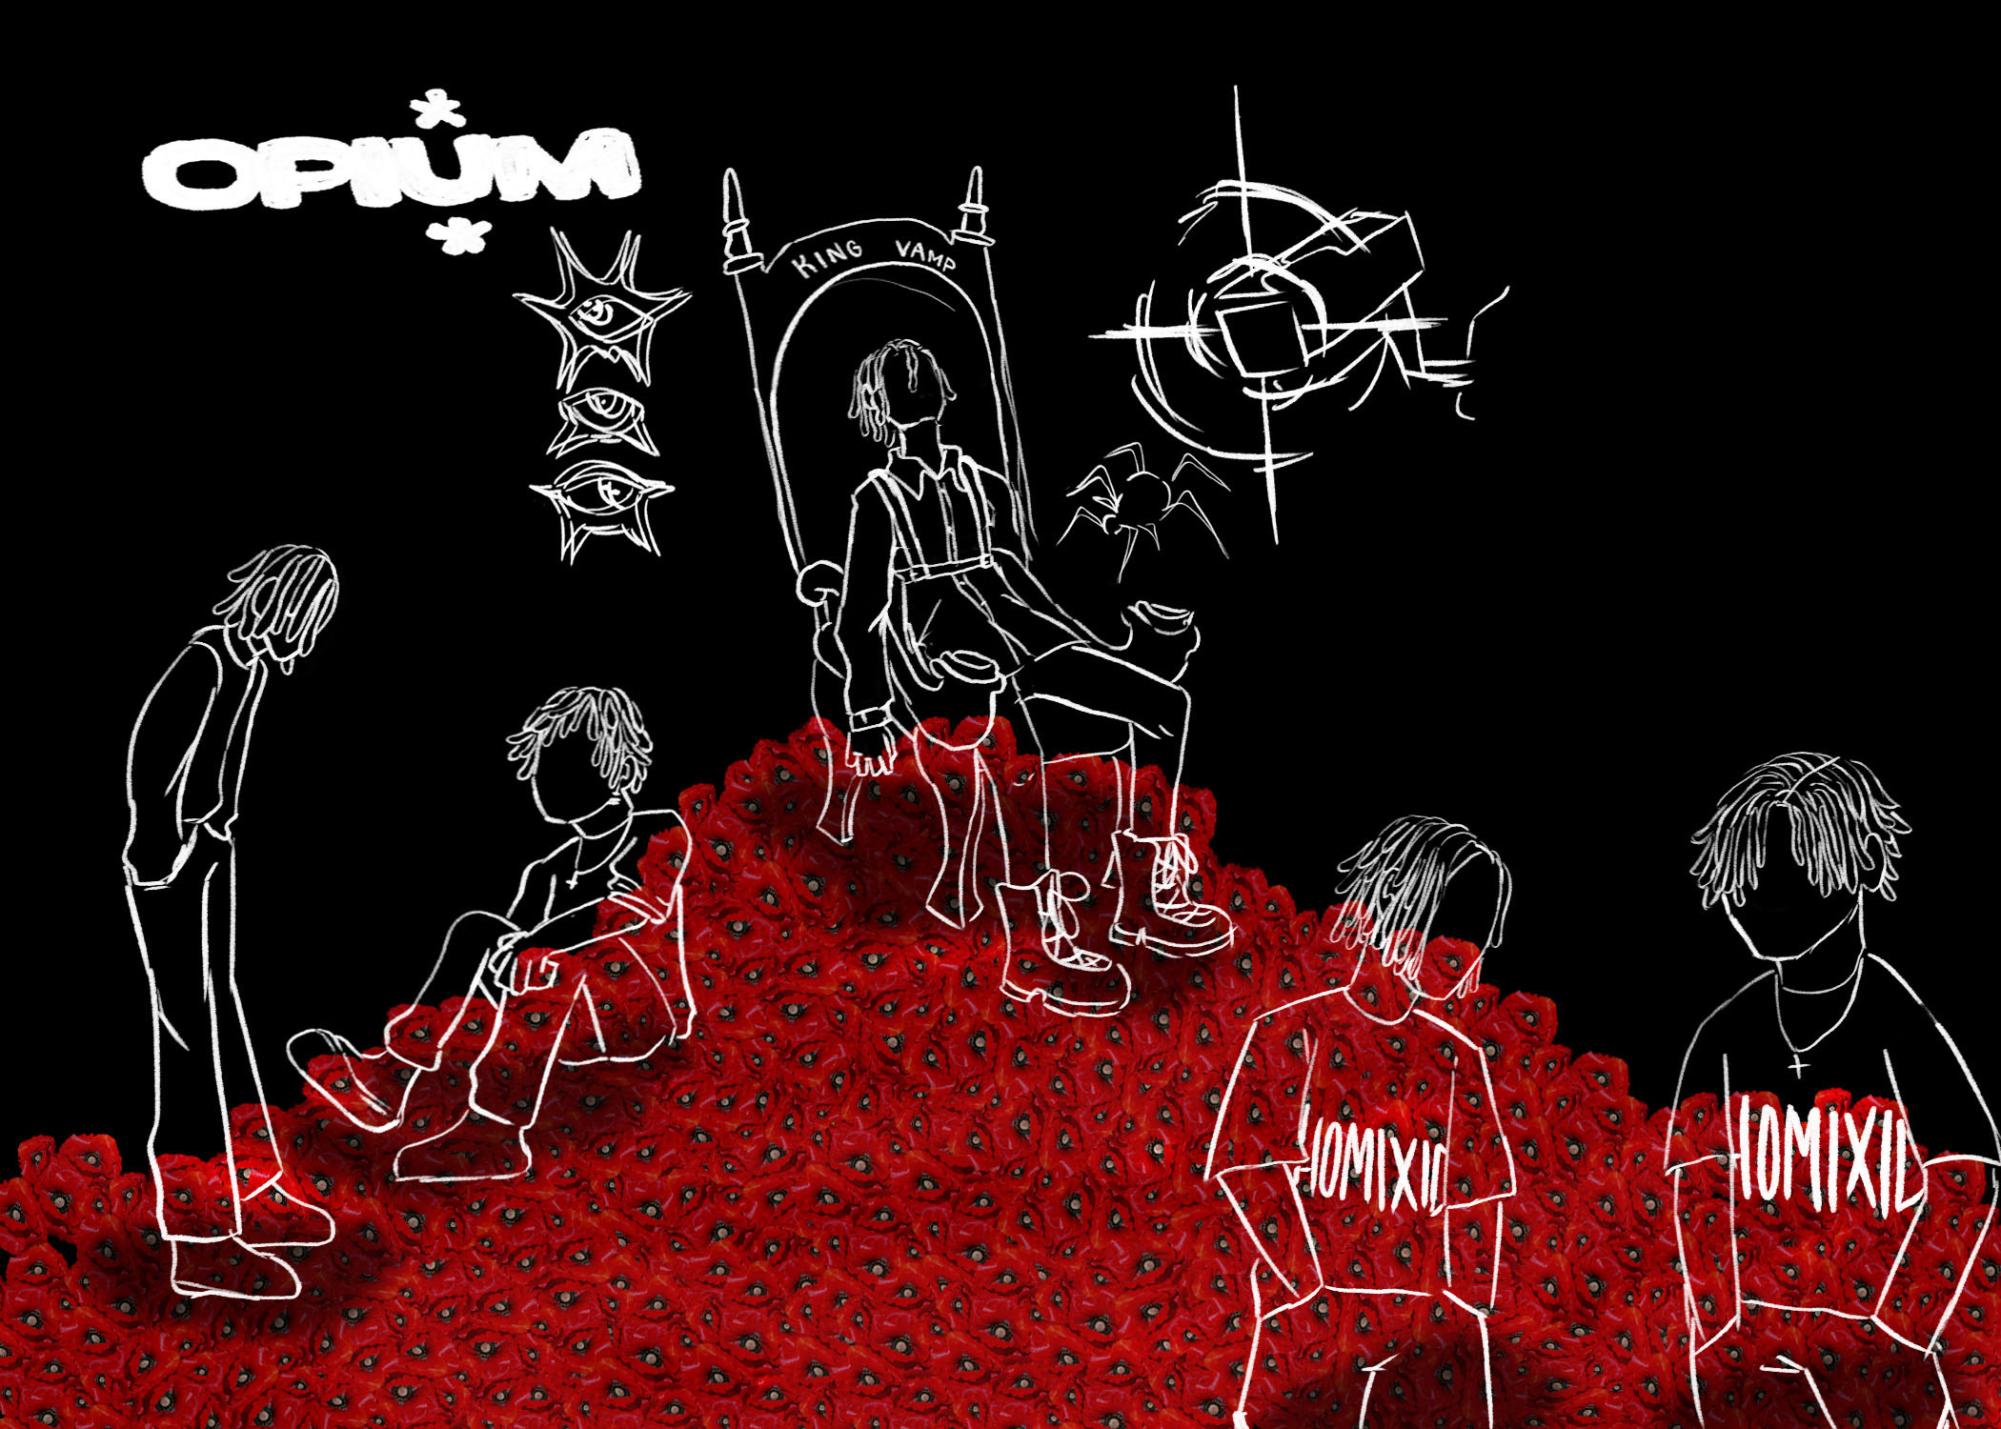 Playboi Carti Finally Drops Second Album, 'Whole Lotta Red